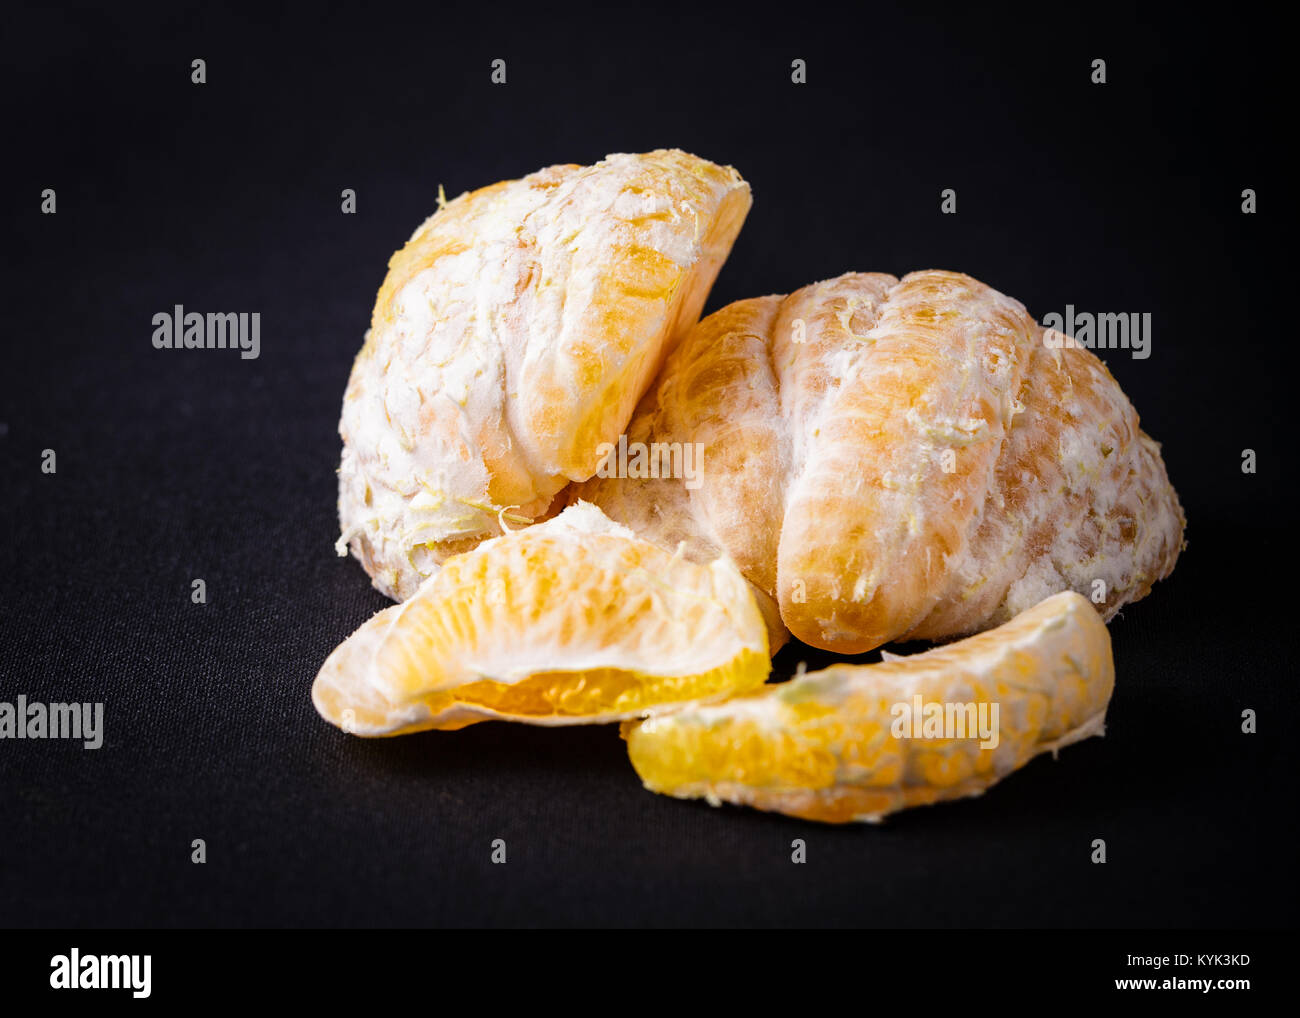 Pieces of an orange mandarin citrus fruit on a balck back ground Stock Photo